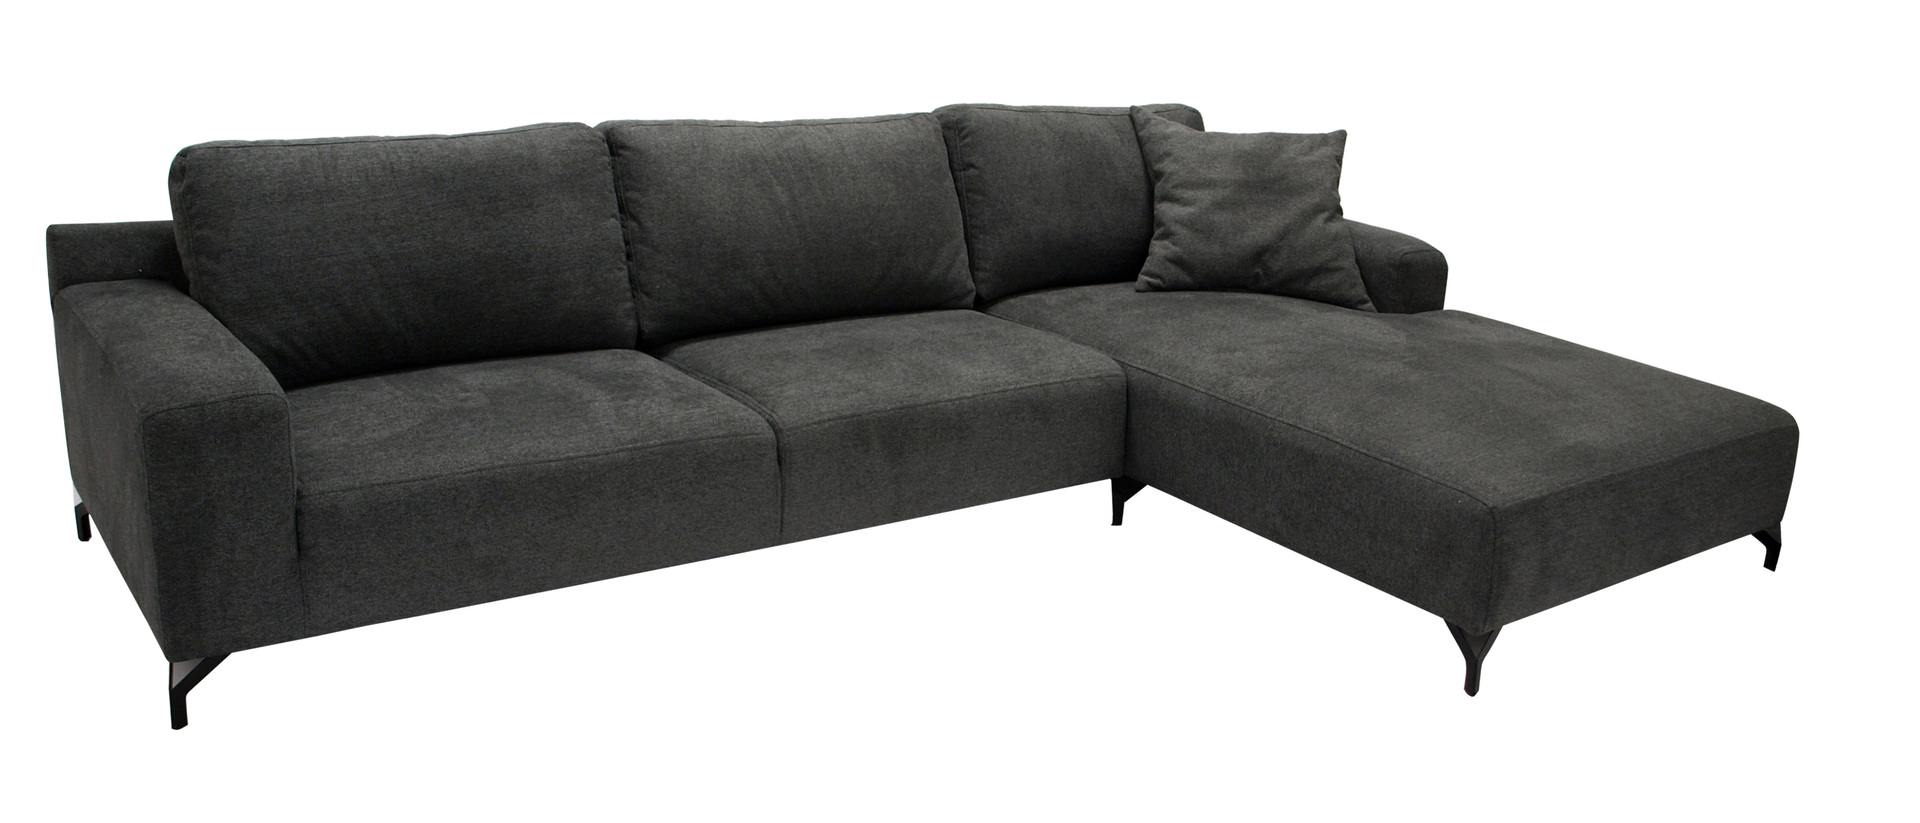 FRG – Handels GmbH Sofa-Set mit Fussteil